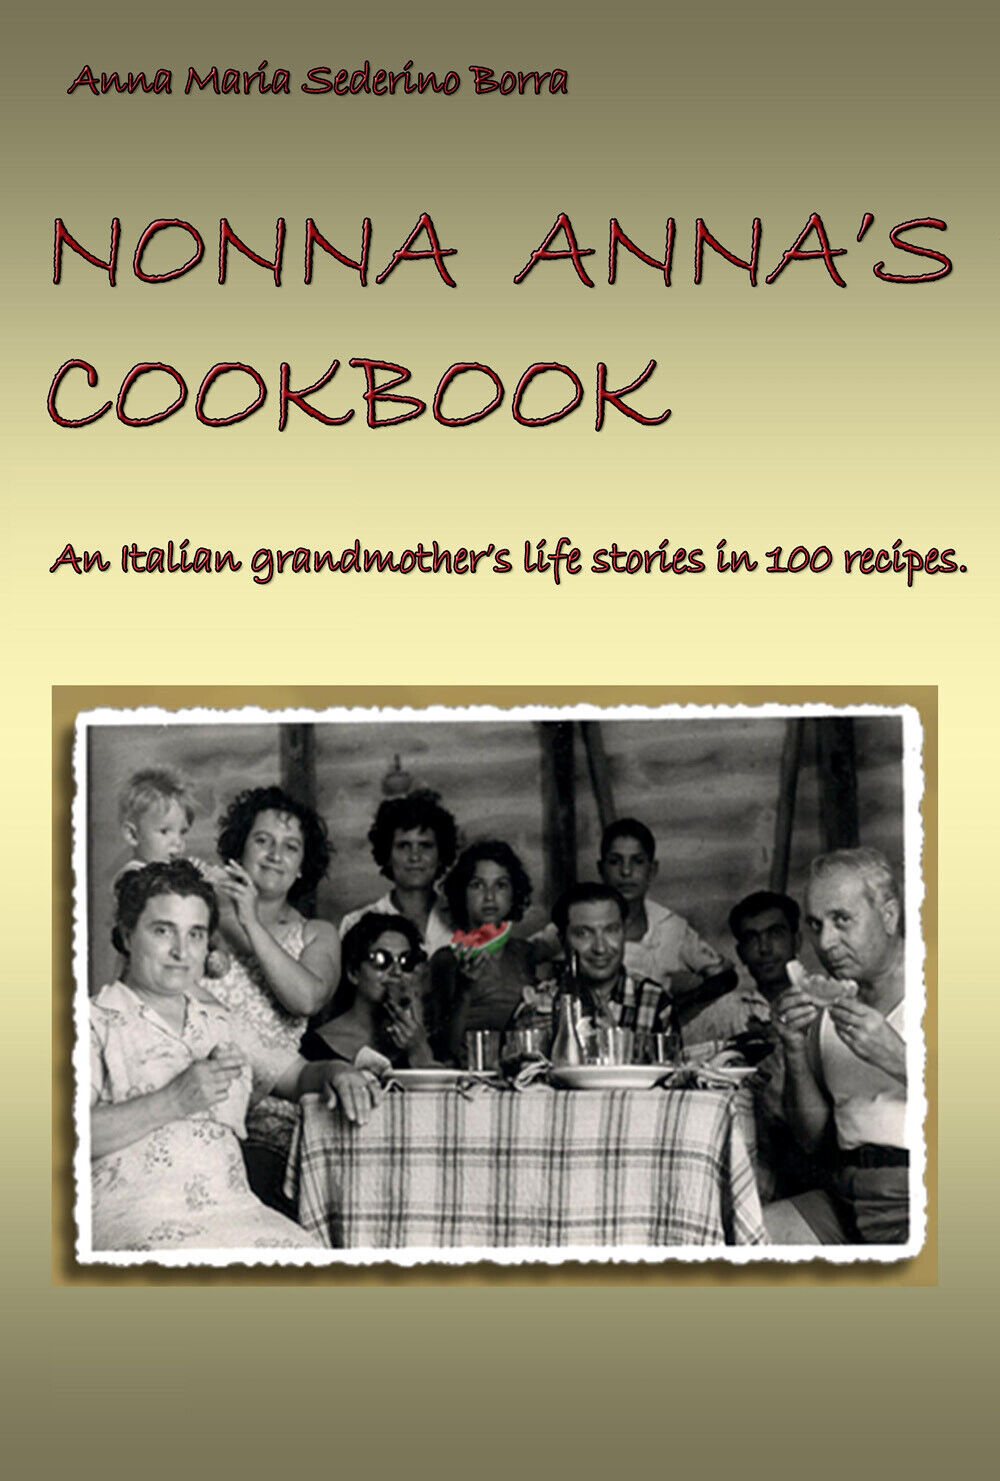 Nonna Anna?s cook book - Anna Maria Sederino Borra,  2020,  Latorre